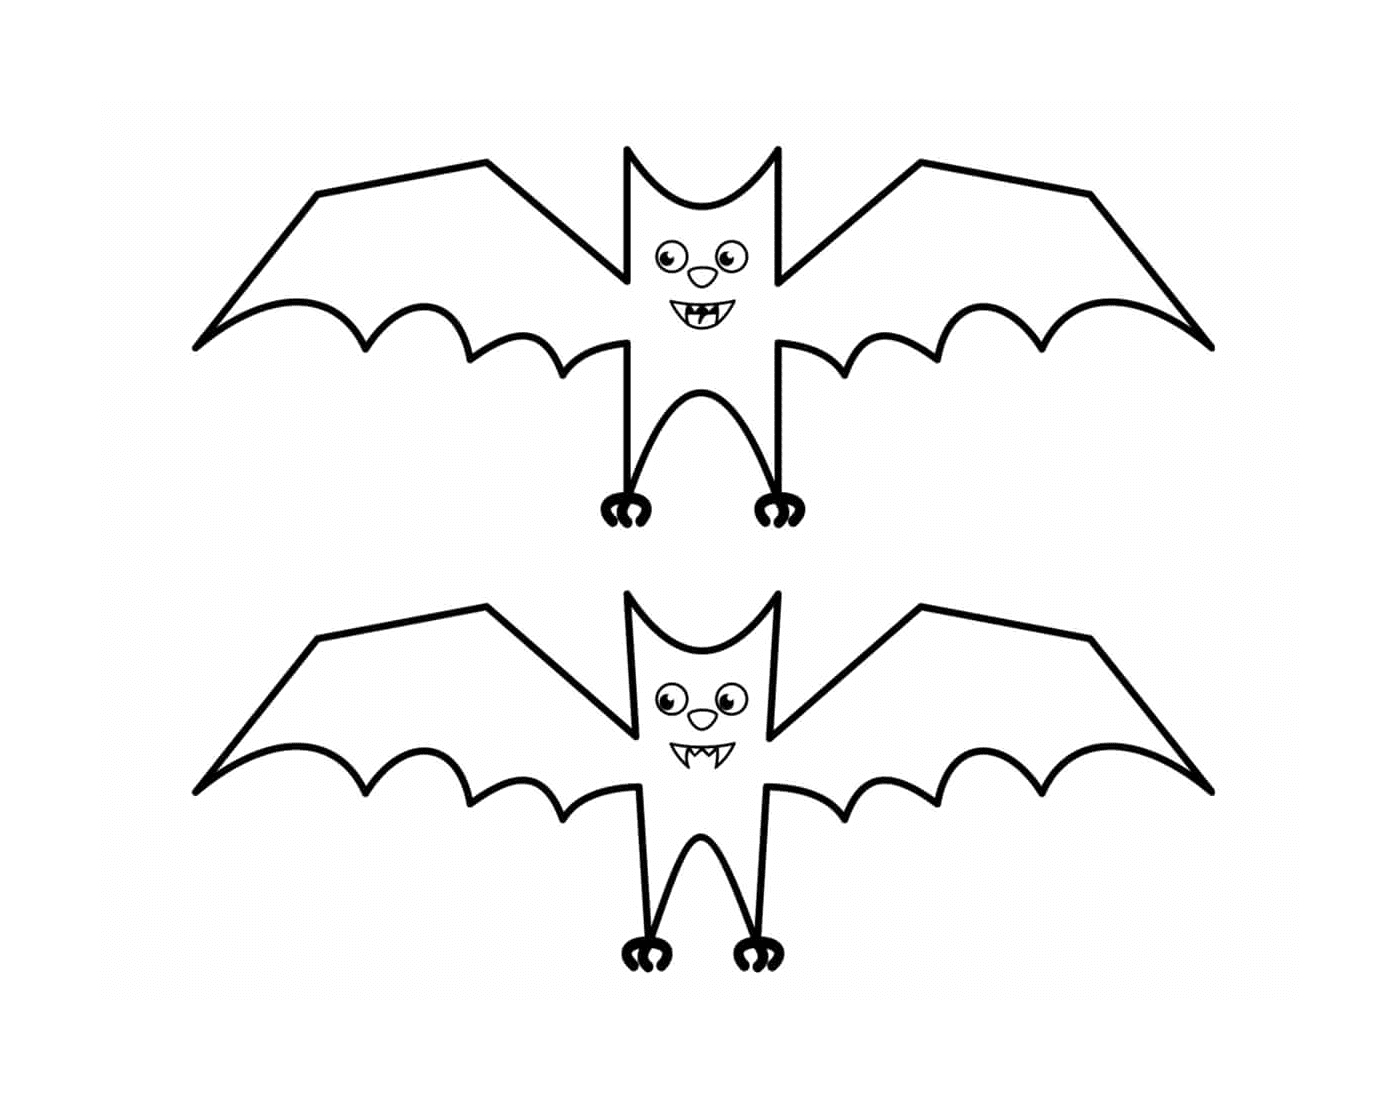  Two bats, enchanting aerial game 